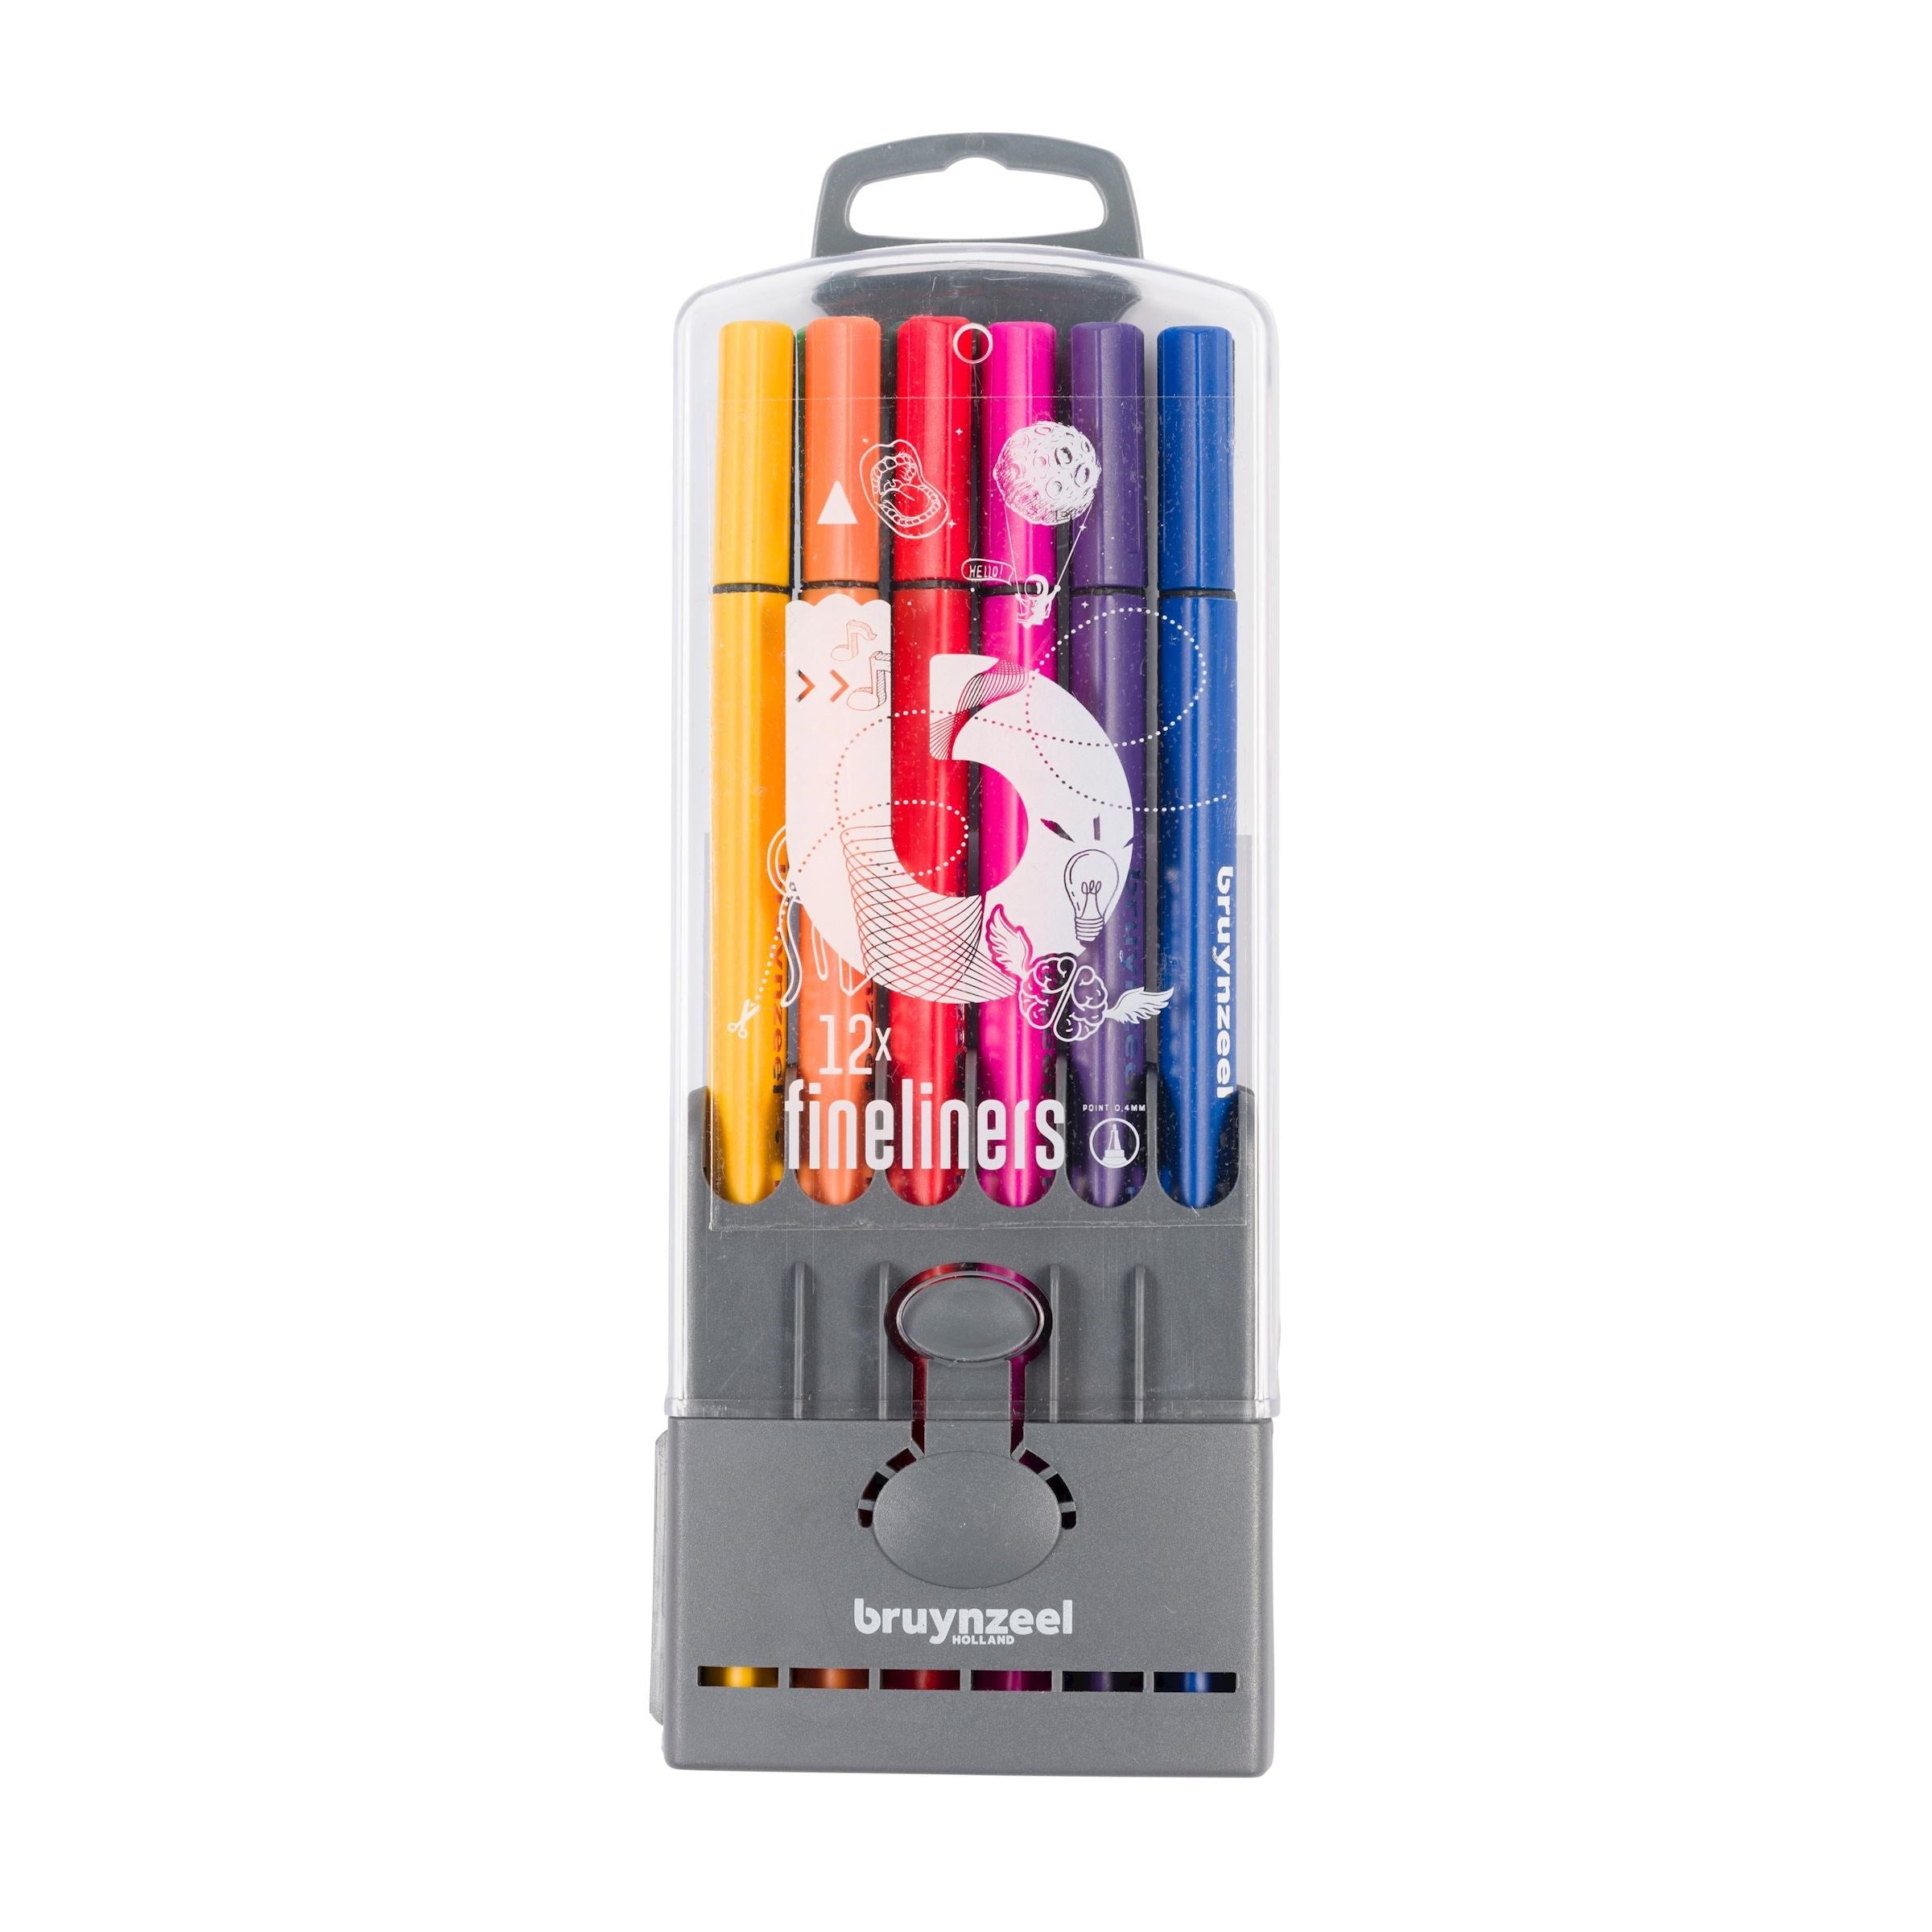 Bruynzeel Fineliner pens 12 colours